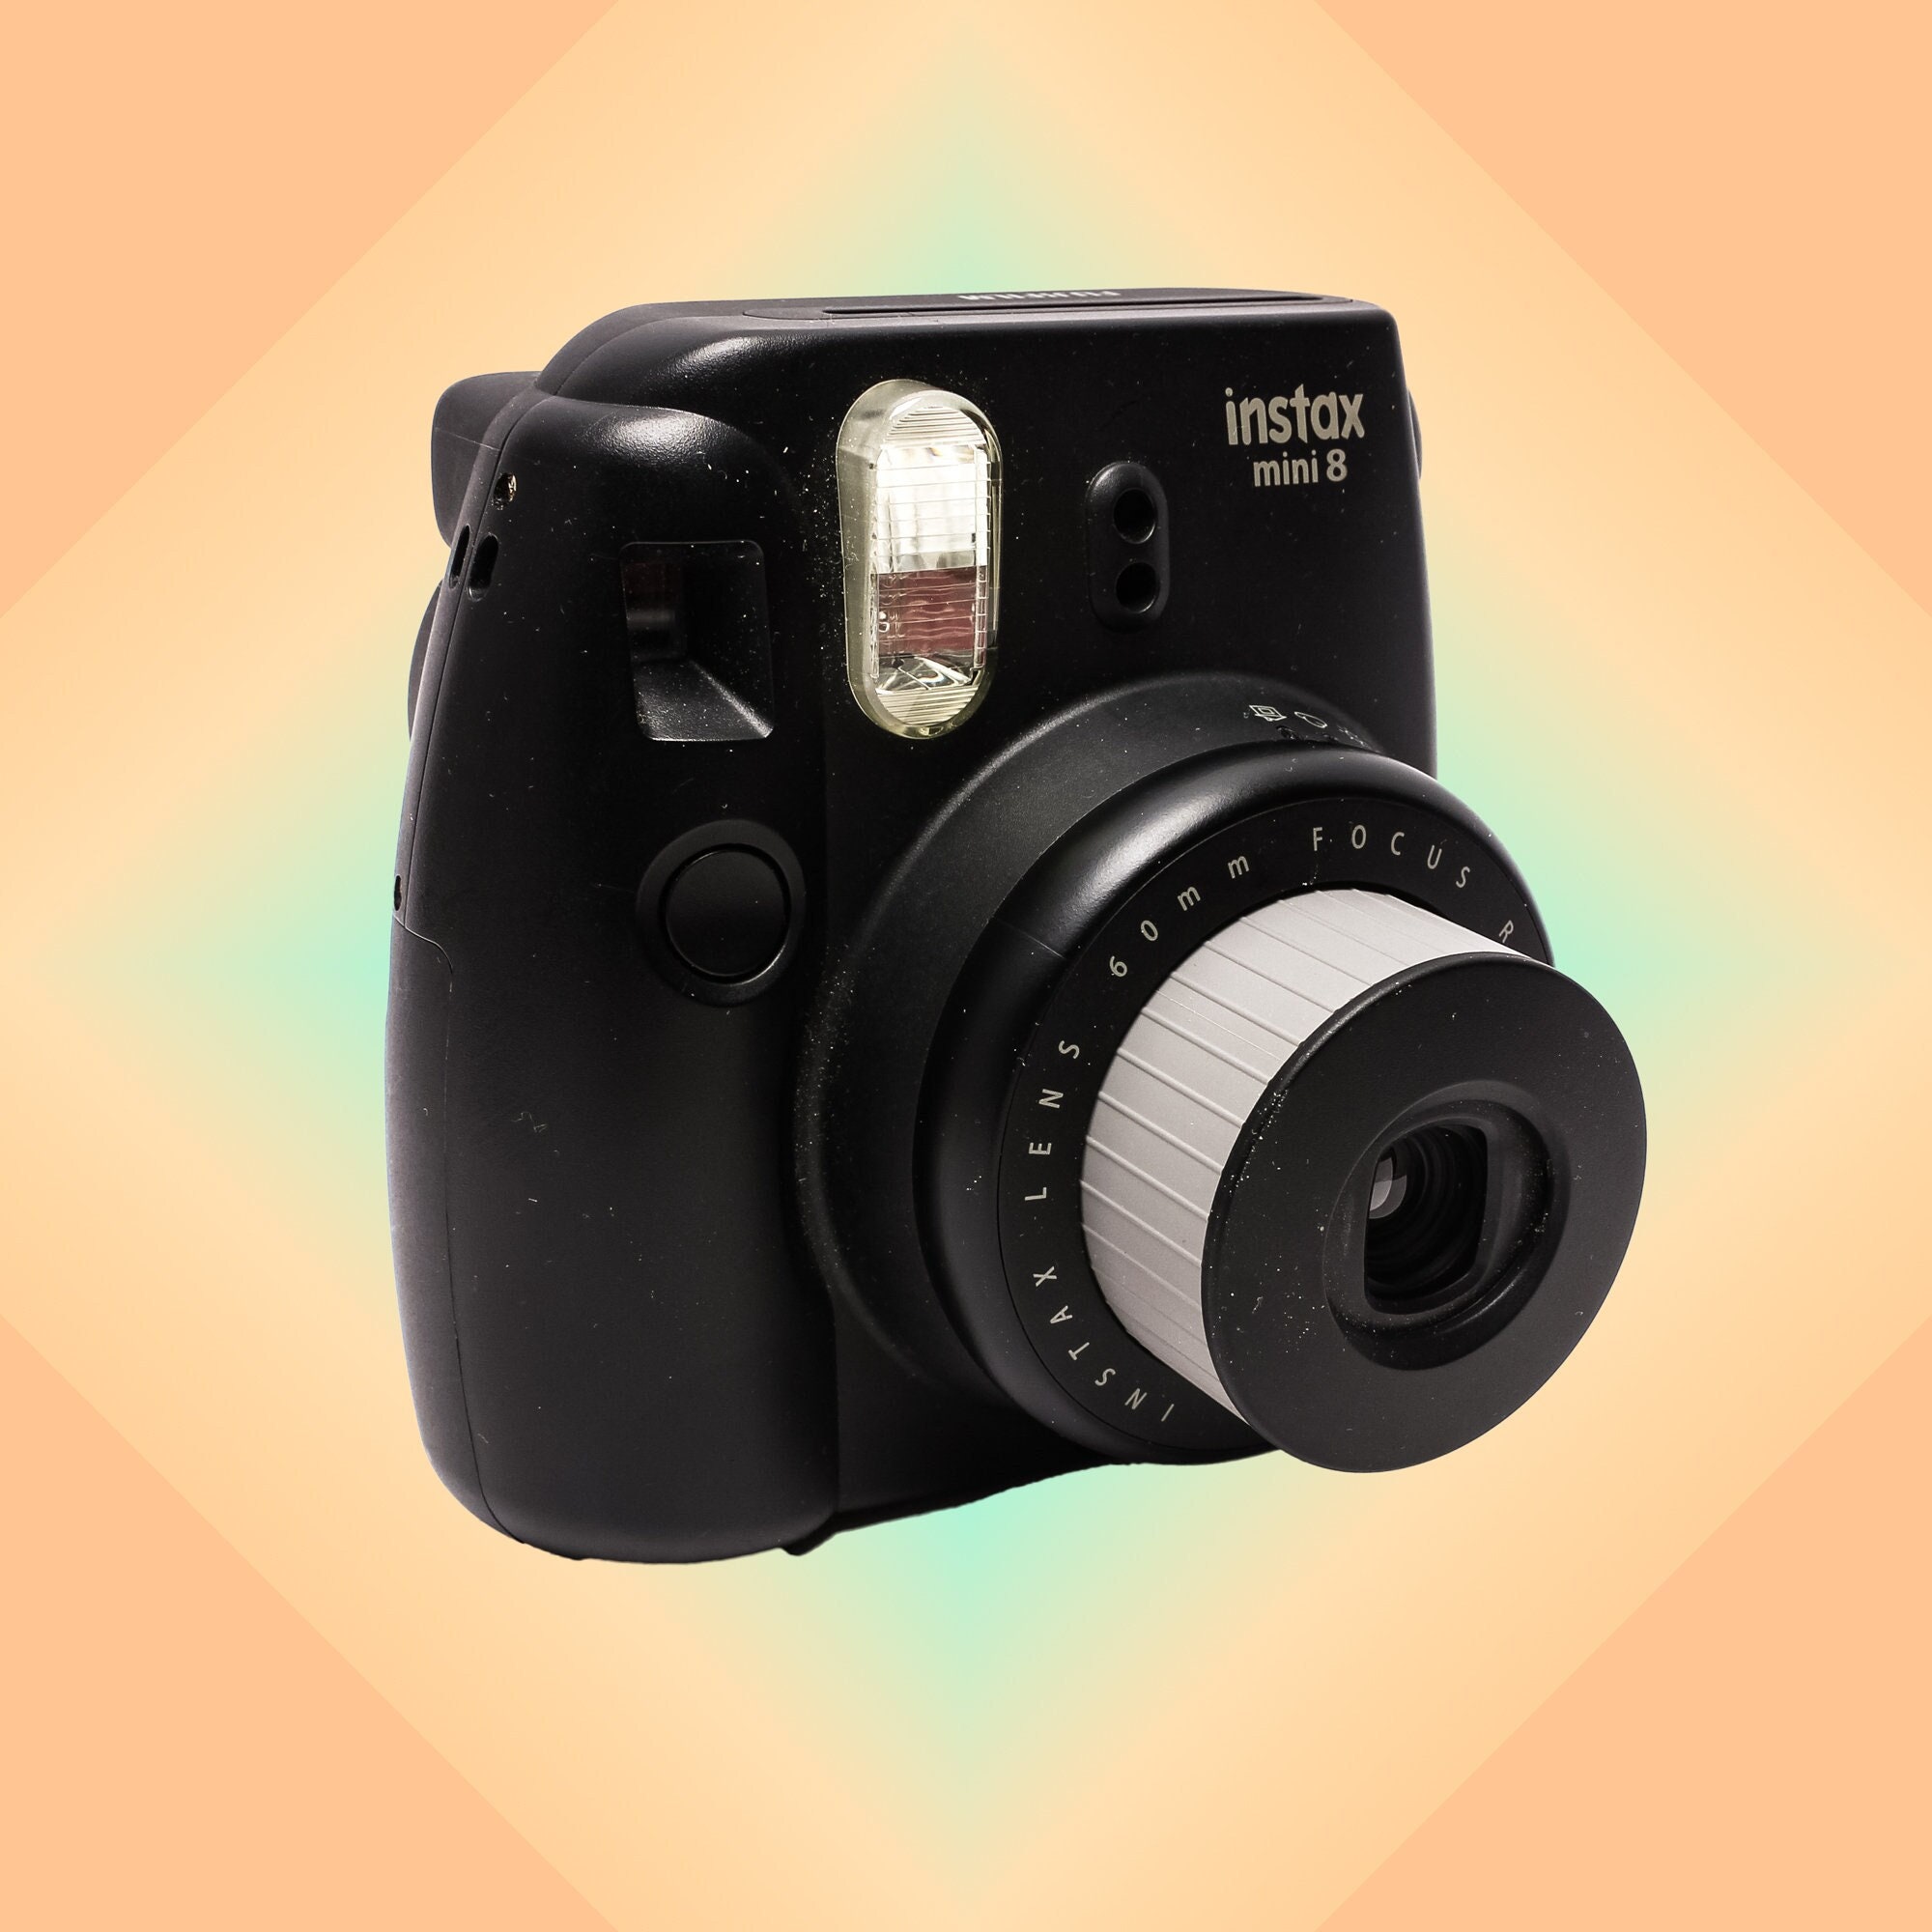 FujiFilm Instax Mini 8 Camera Black + Accessories KIT for Fujifilm Instax  Mini 8 Camera Includes: 40 Instax Film + Custom Case + 4 AA Rechargeable  Batteries + A…